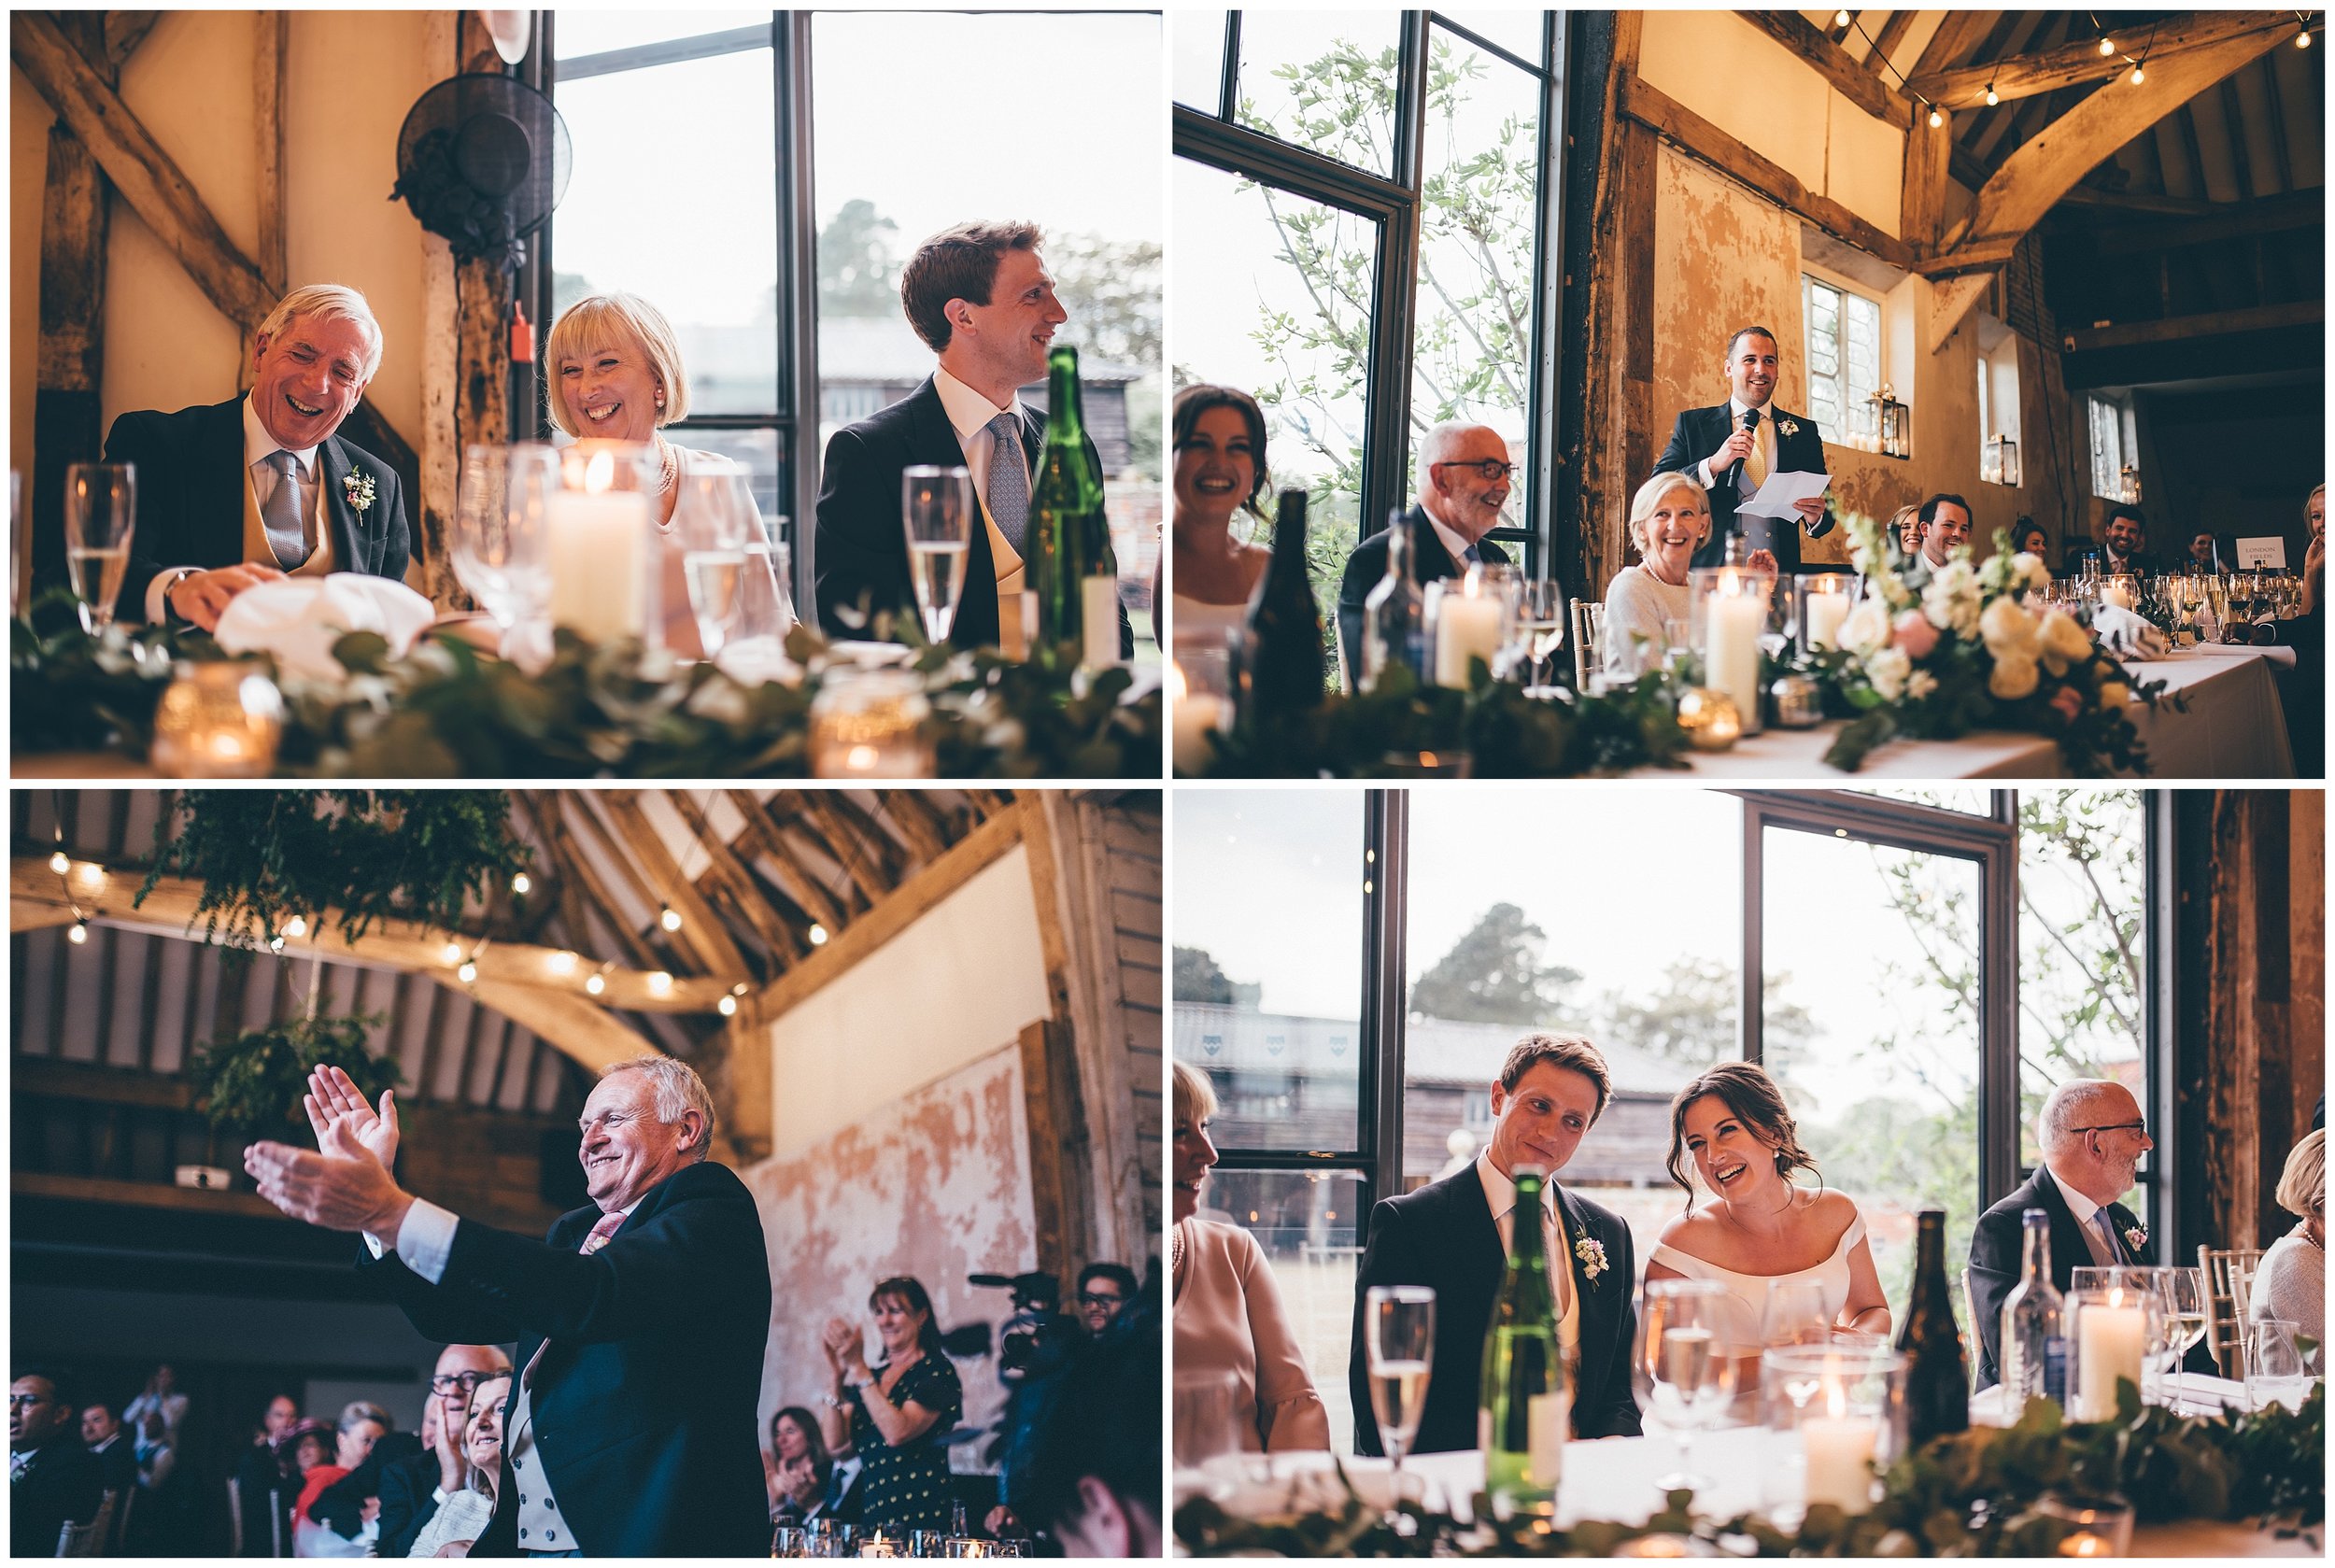 Wedding speeches at Henham Park wedding barns in Southwold.